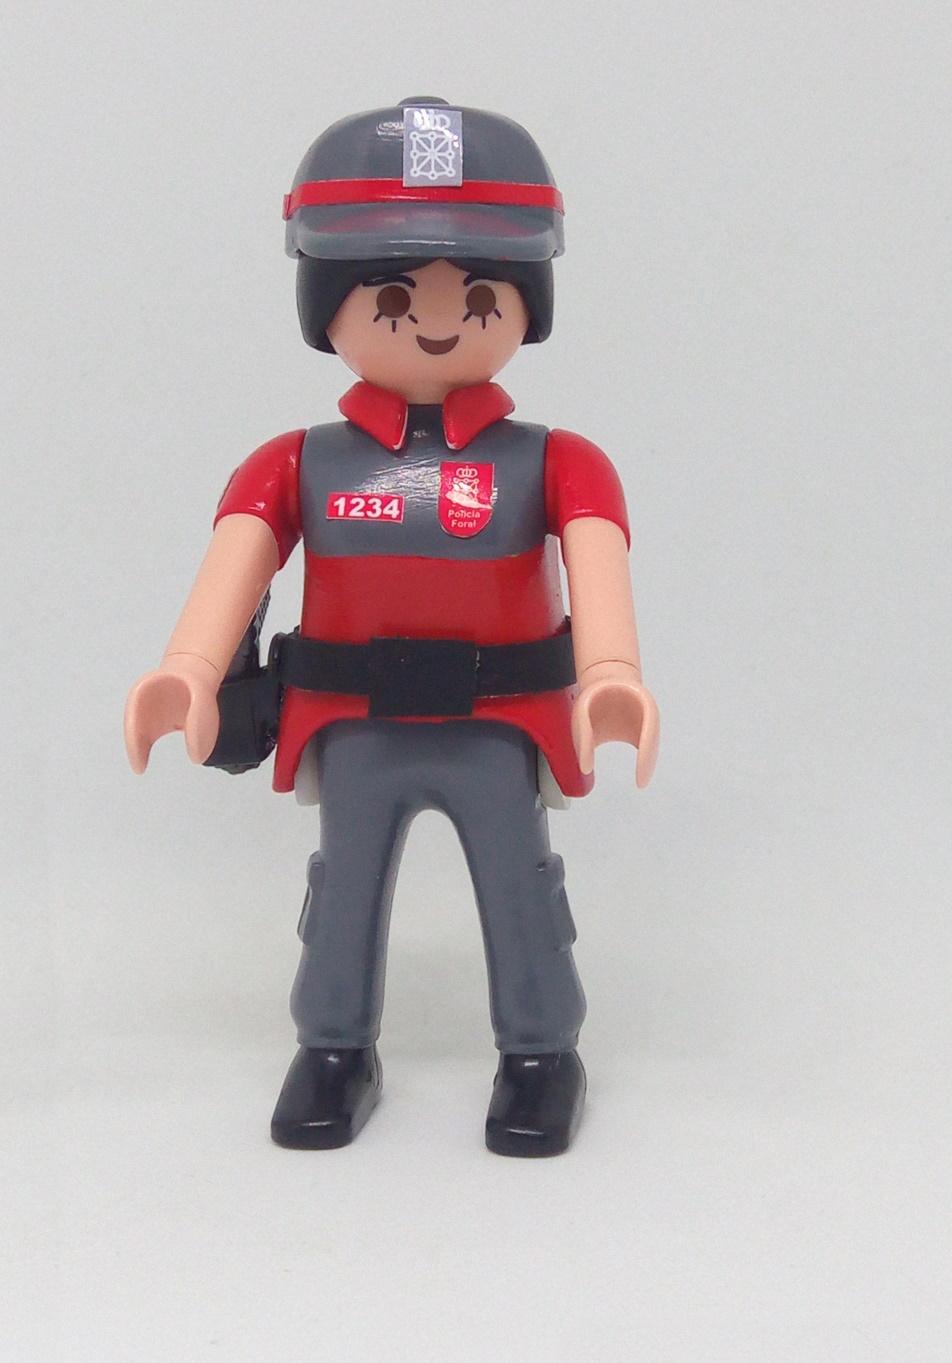 Playmobil personalizado con uniforme policía foral de Navarra Foruzaingoa mujer